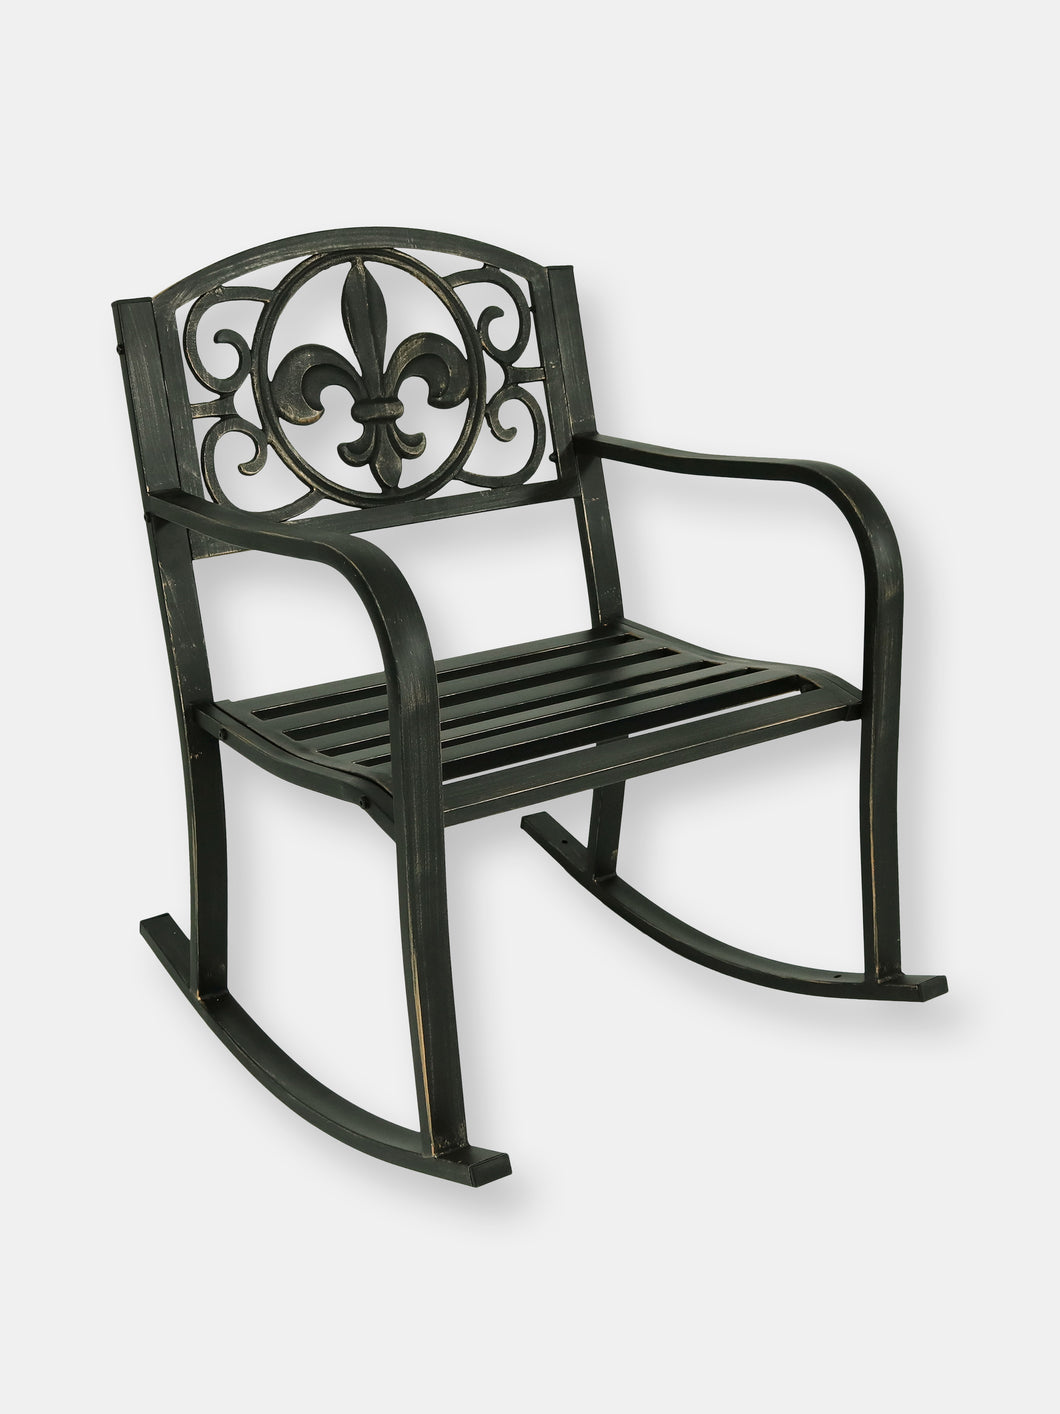 Patio Rocking Chair - Cast Iron and Steel with Fleur-de-Lis Design